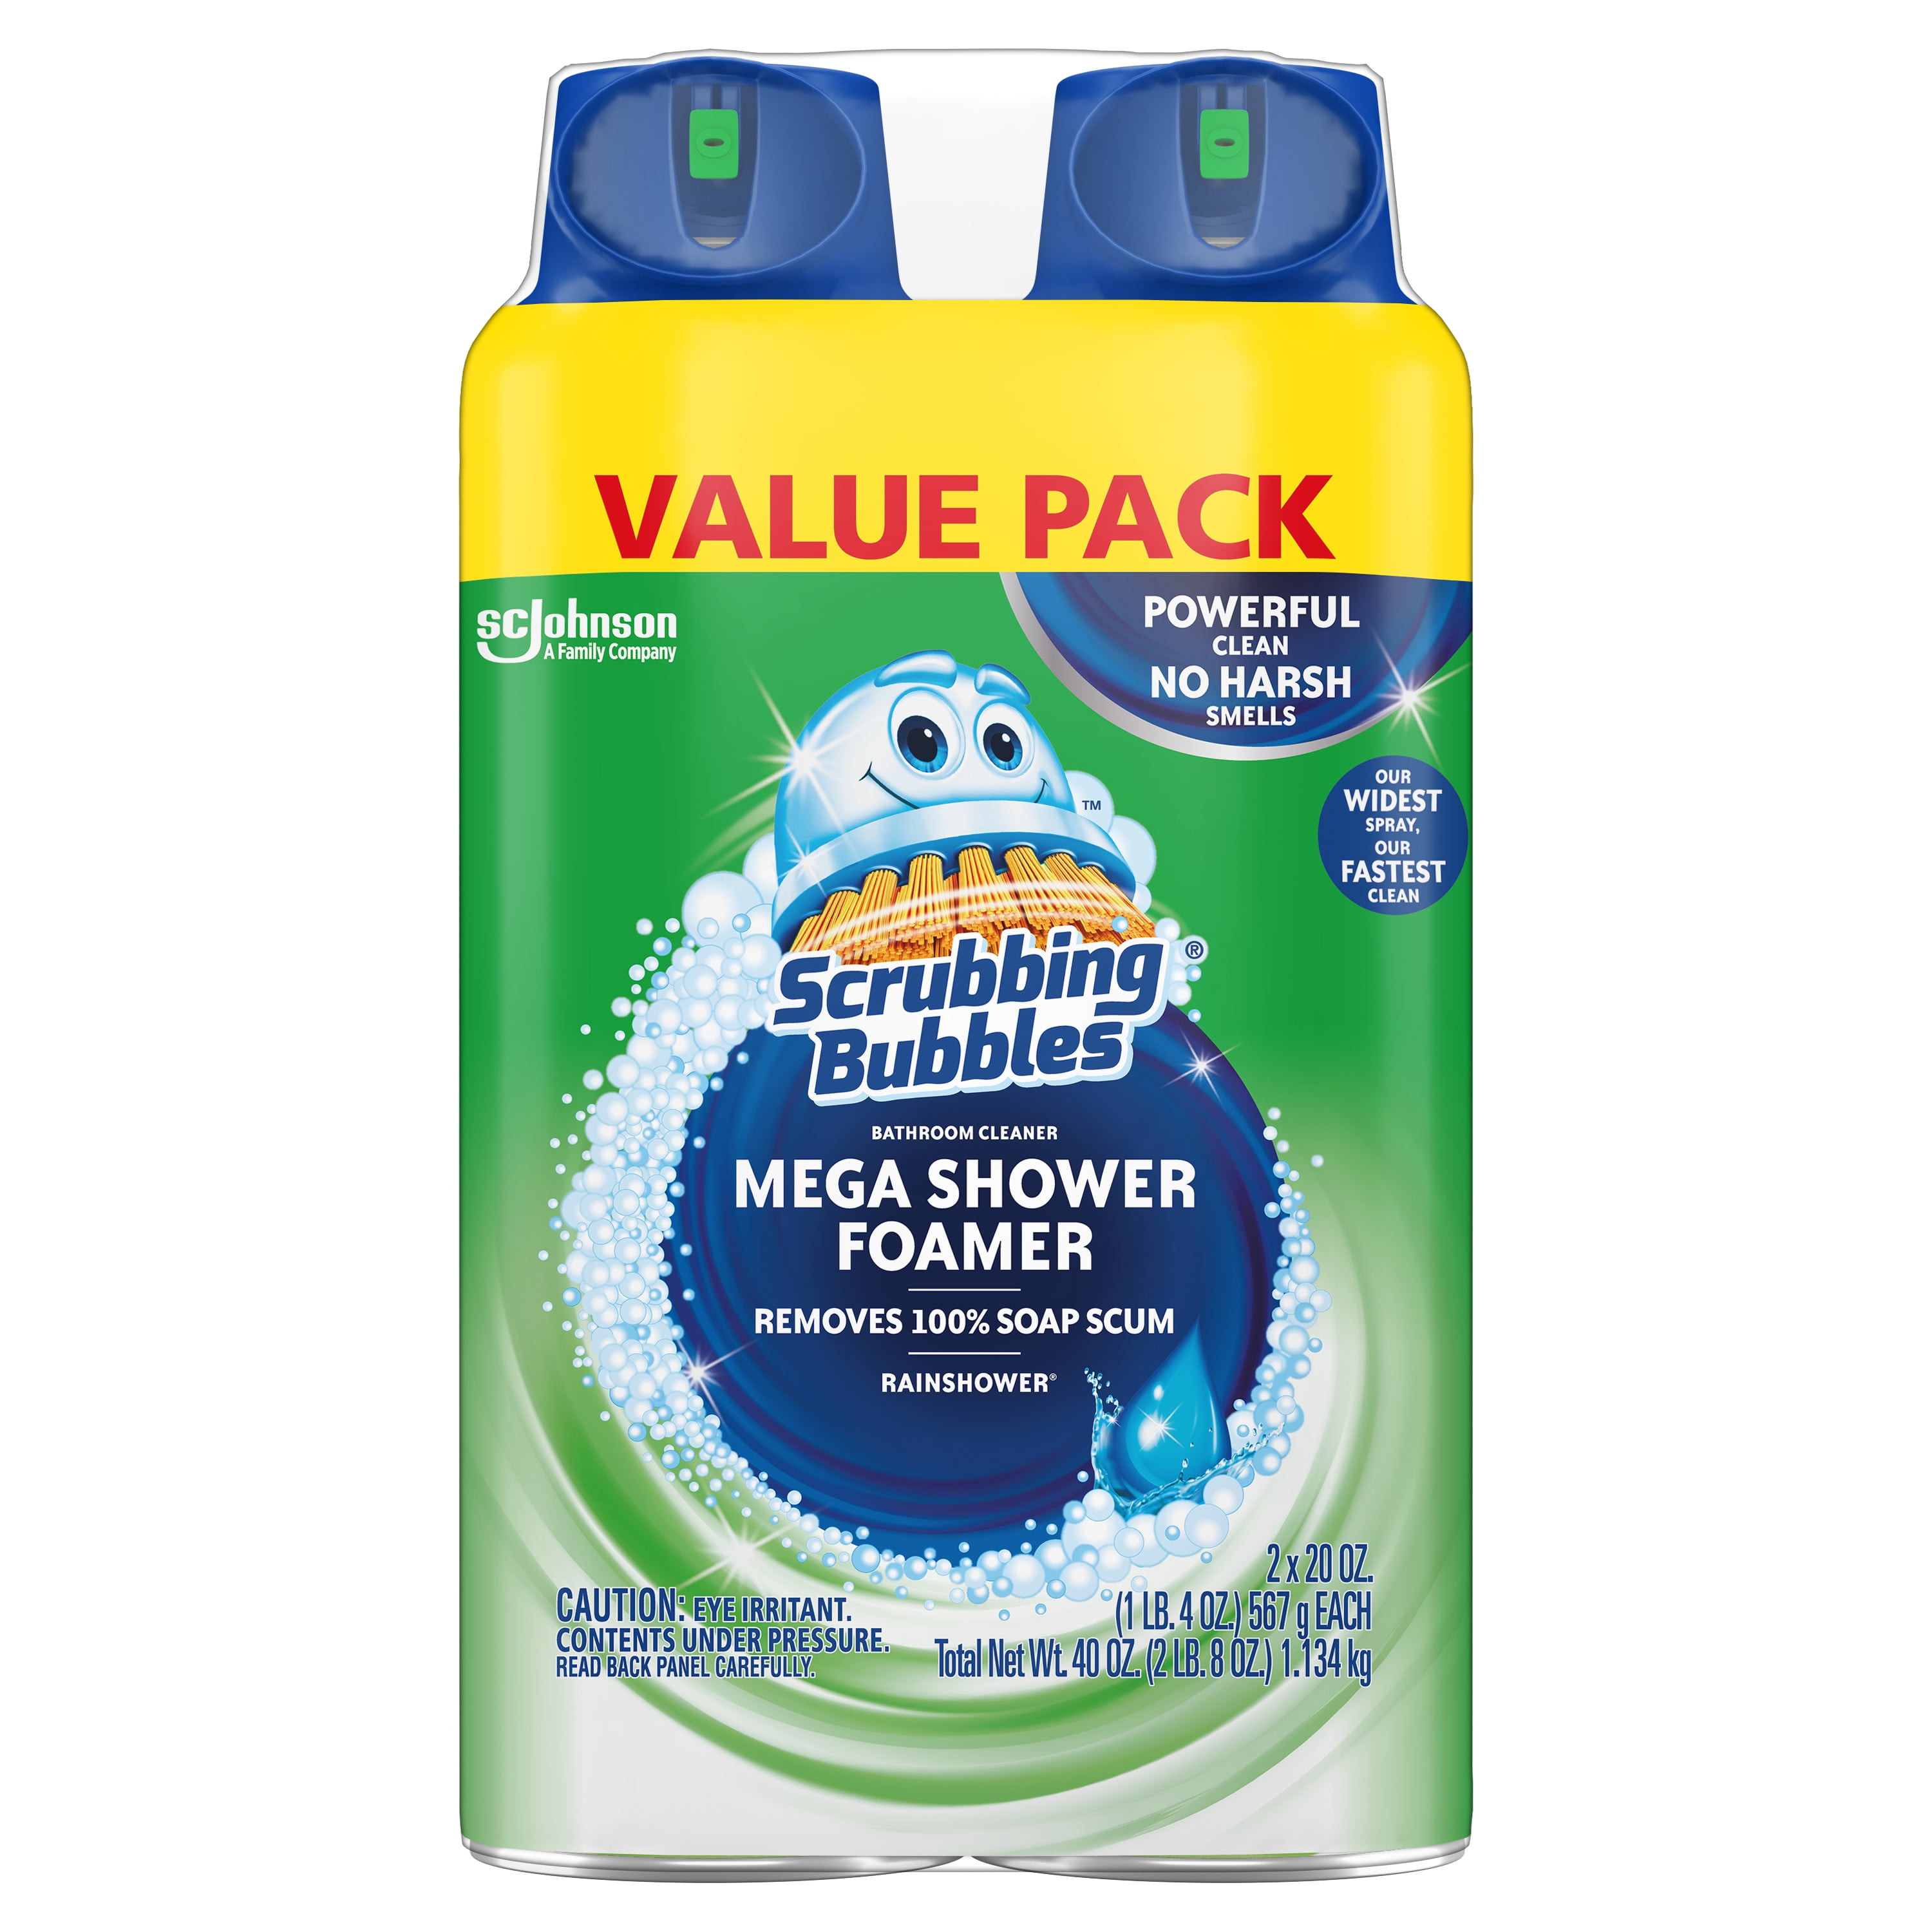 Scrubbing Bubbles Mega Shower Foamer Aerosol, Tough Foaming Bathroom, Tile, Bathtub and Disinfectant Shower Cleaner (1 Aerosol Spray), Rainshower Scent, 20 Oz (Pack of 2)